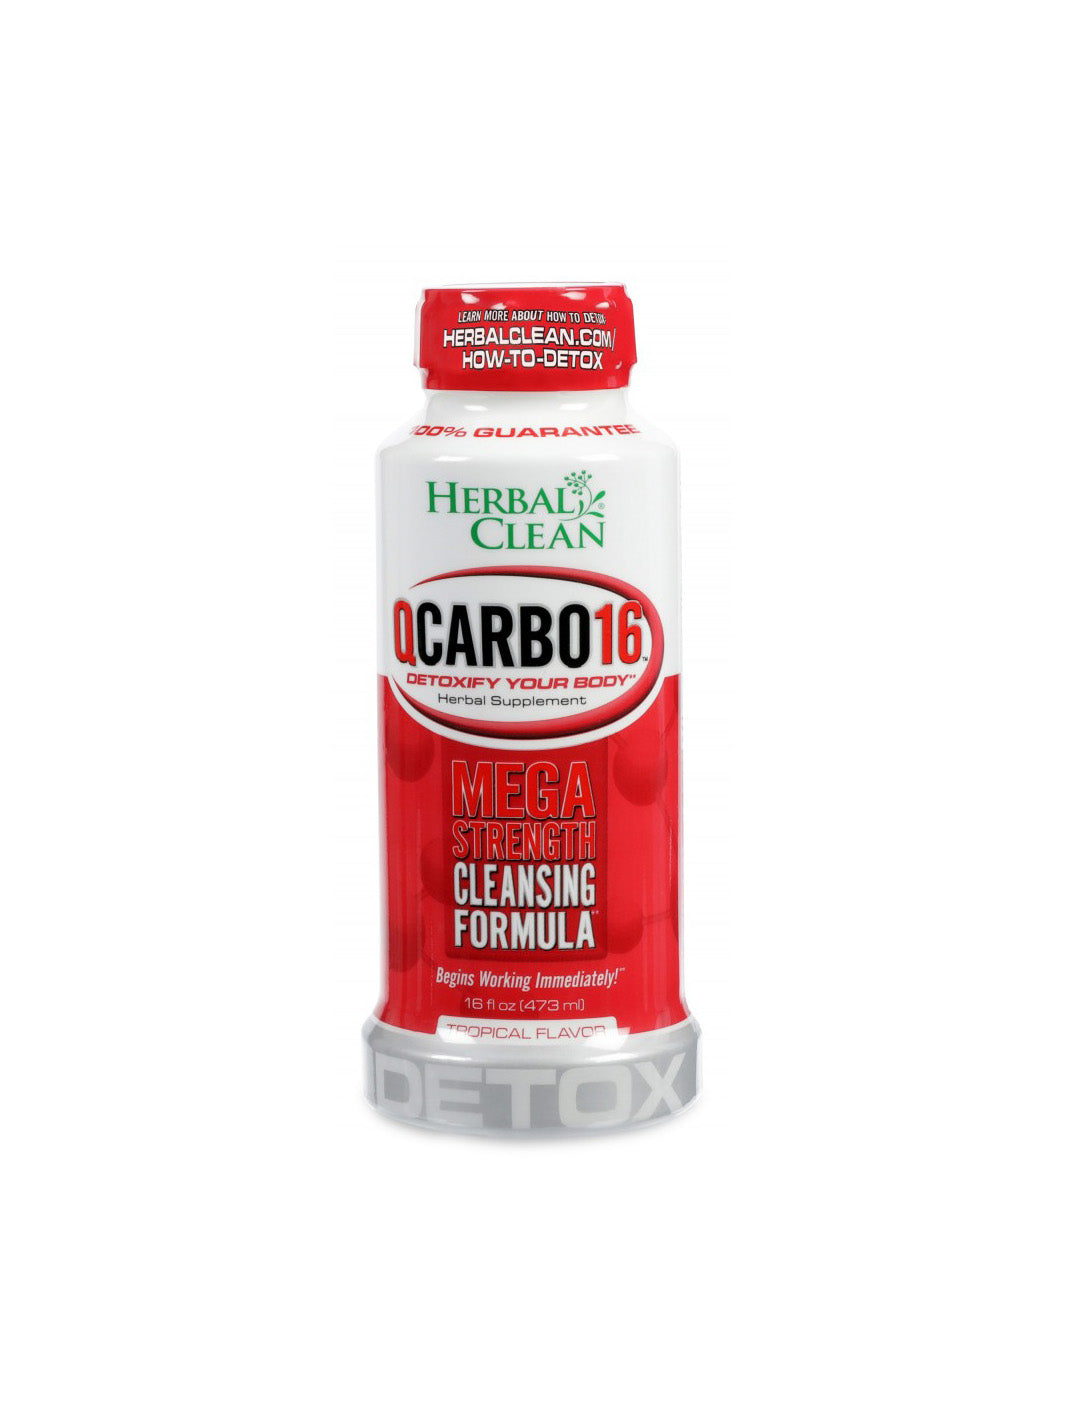 QCarbo16 Detoxify Your Body - Mega Strength Cleansing Formula